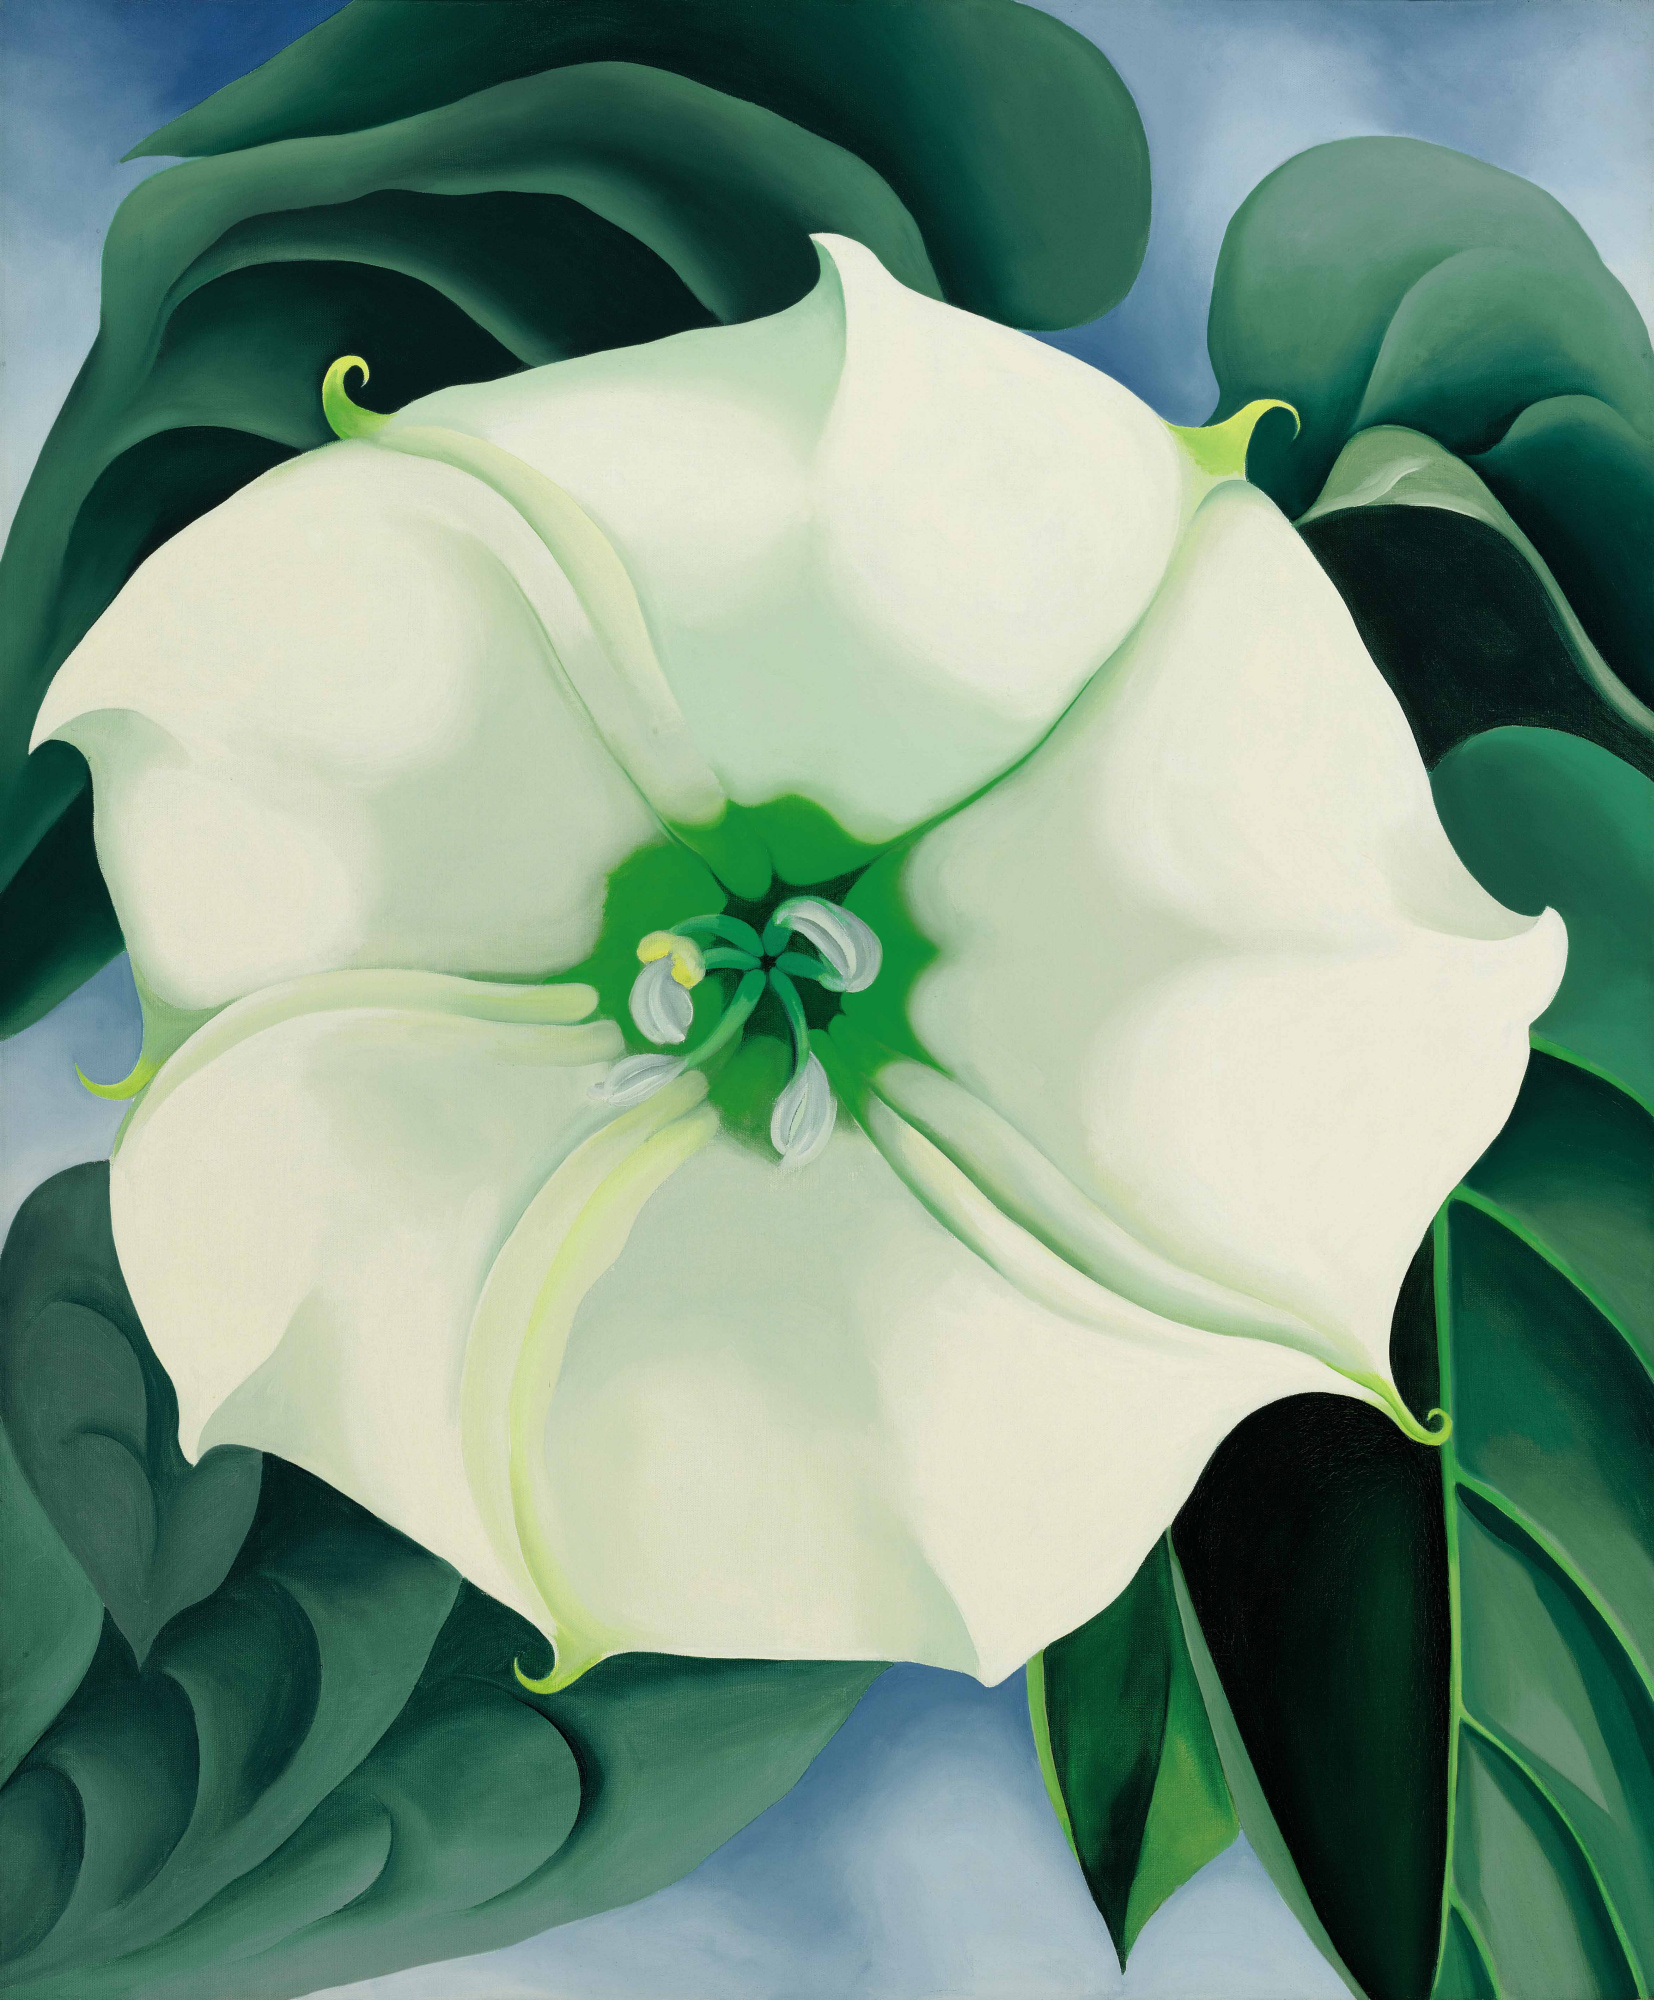 Georgia O'keeffe's "Jimson Weed/white Flower No. 1" (1932)